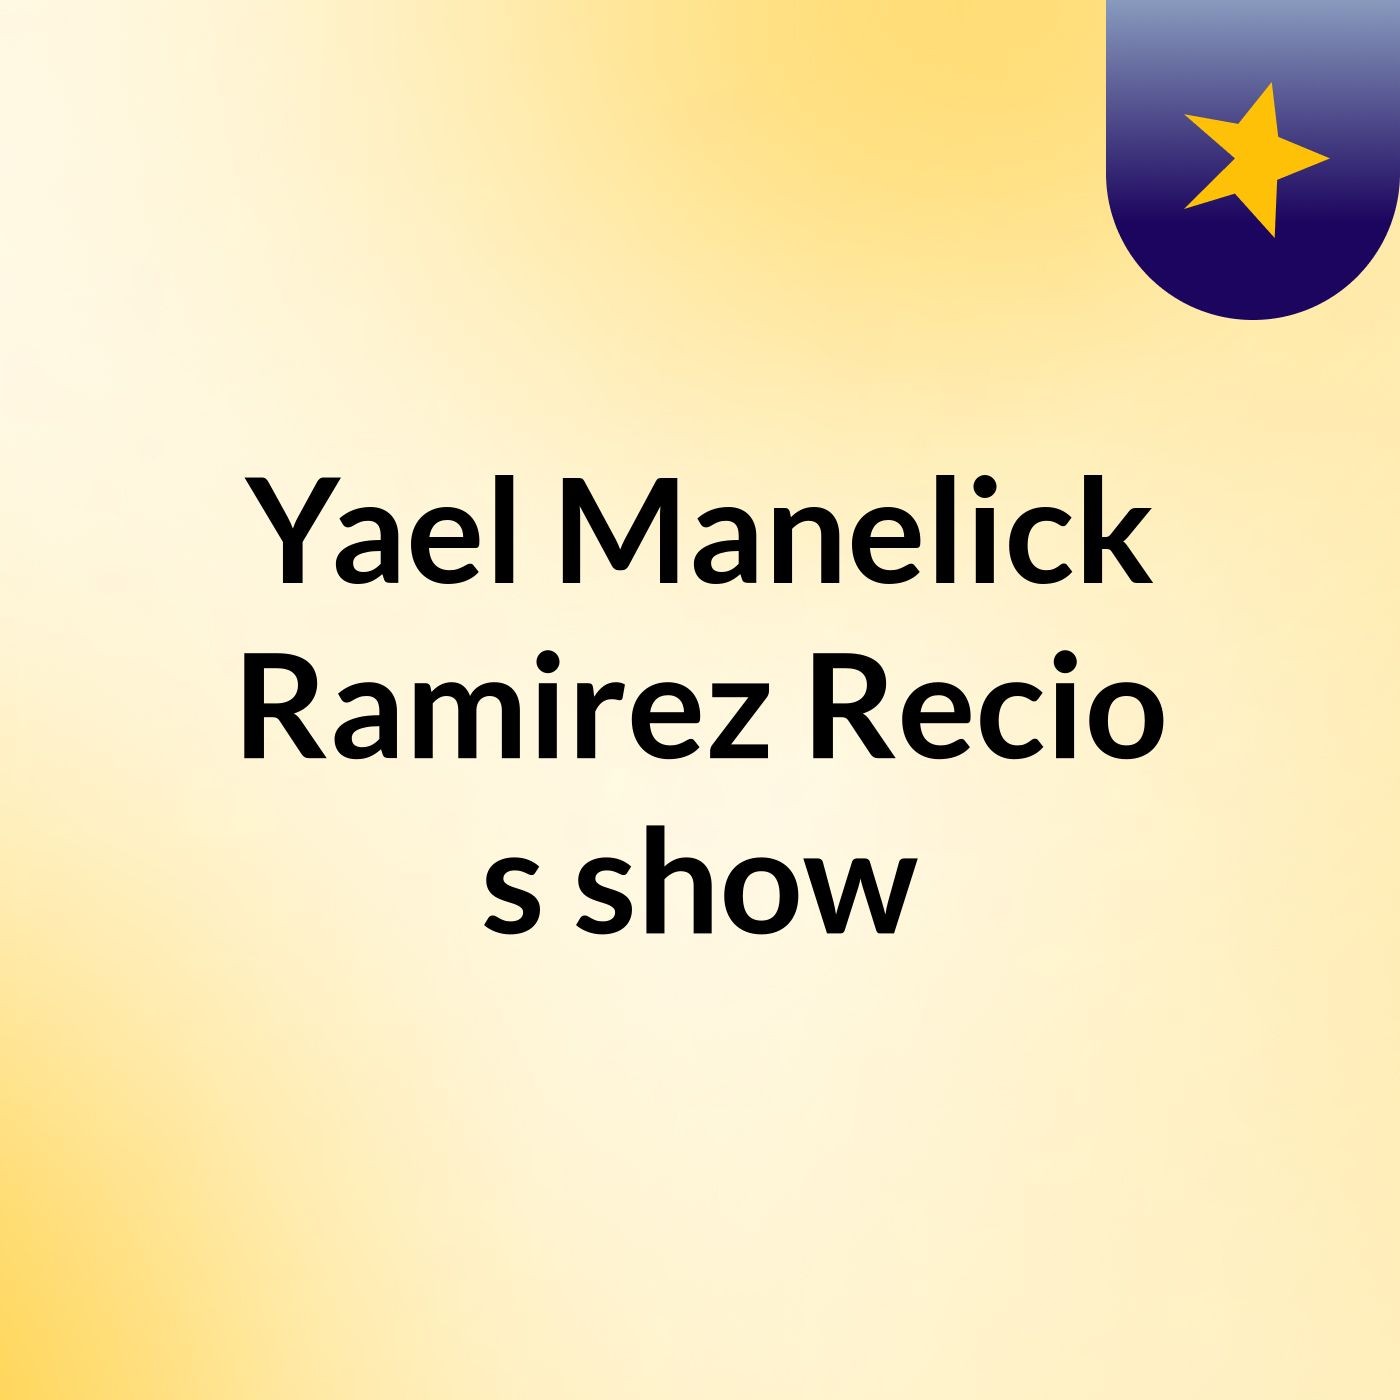 Yael Manelick Ramirez Recio's show